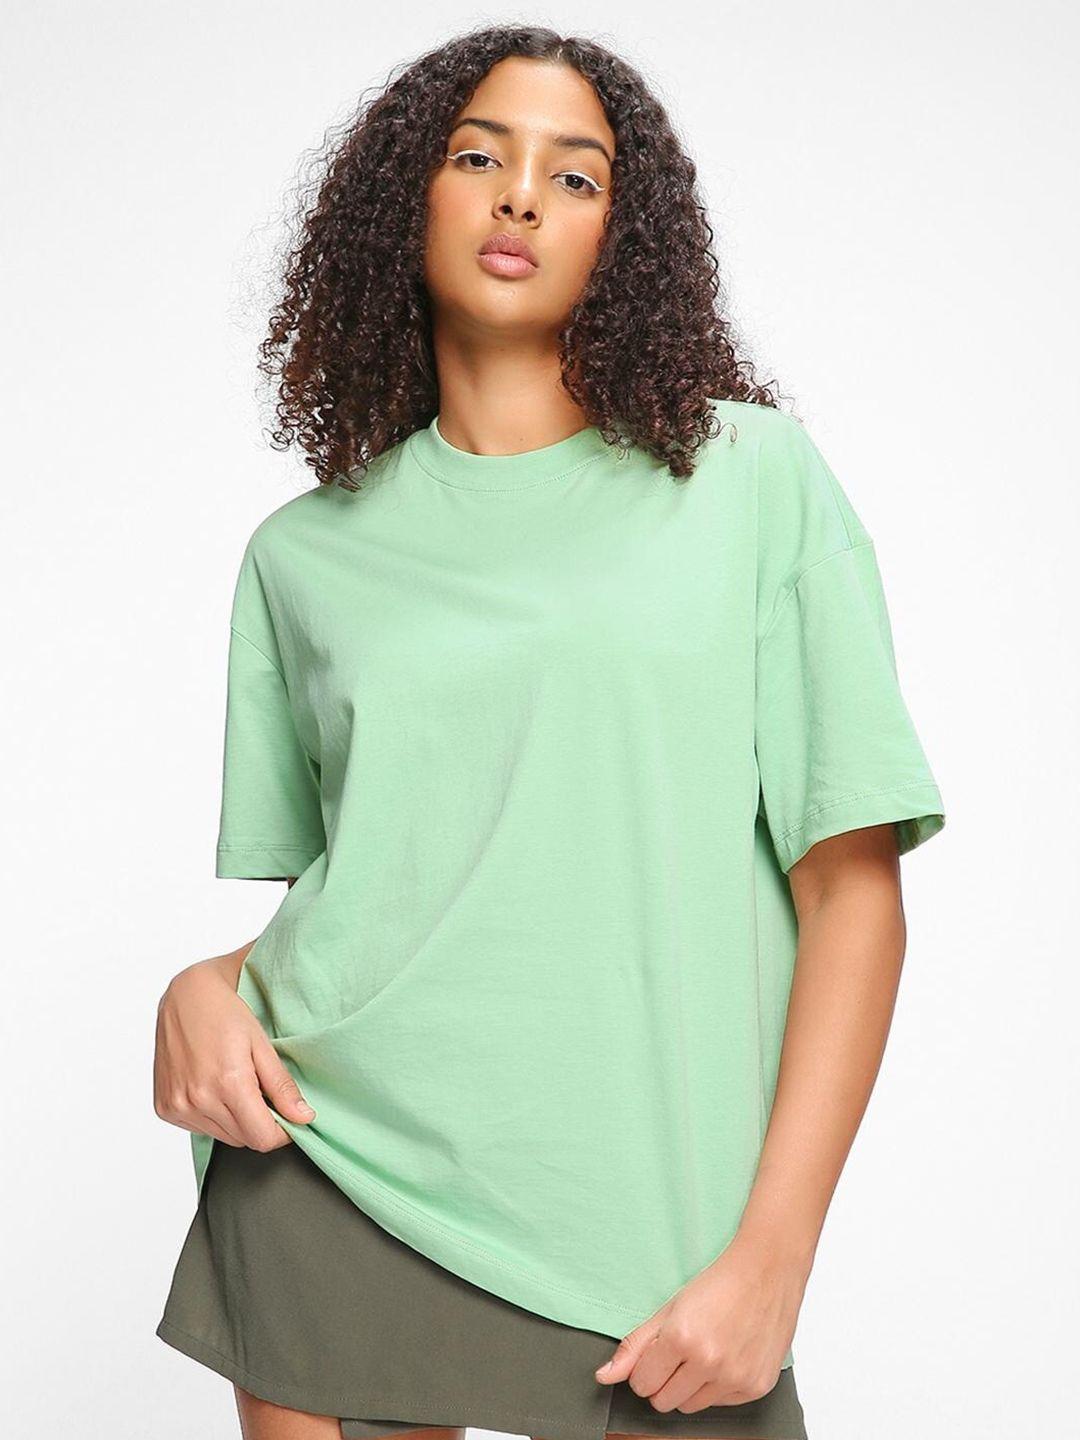 bewakoof-women-cotton-oversized-t-shirt